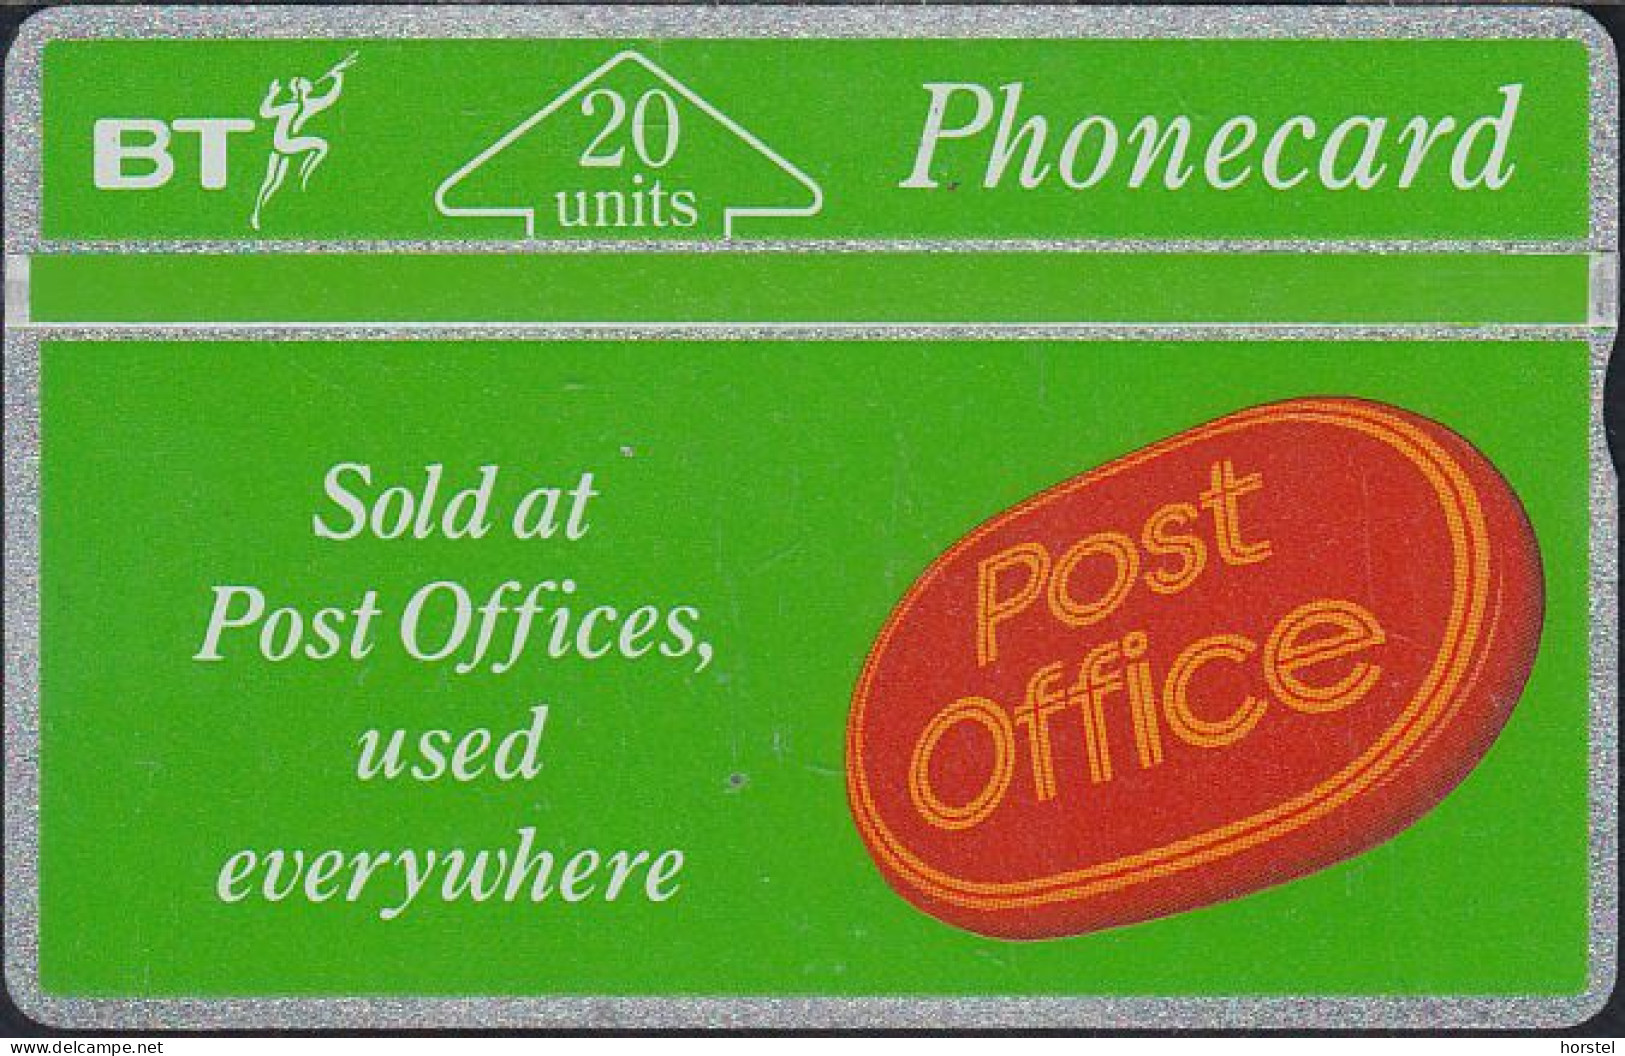 UK Bta 025 Post Office - 20 Units - 222K - BT Advertising Issues